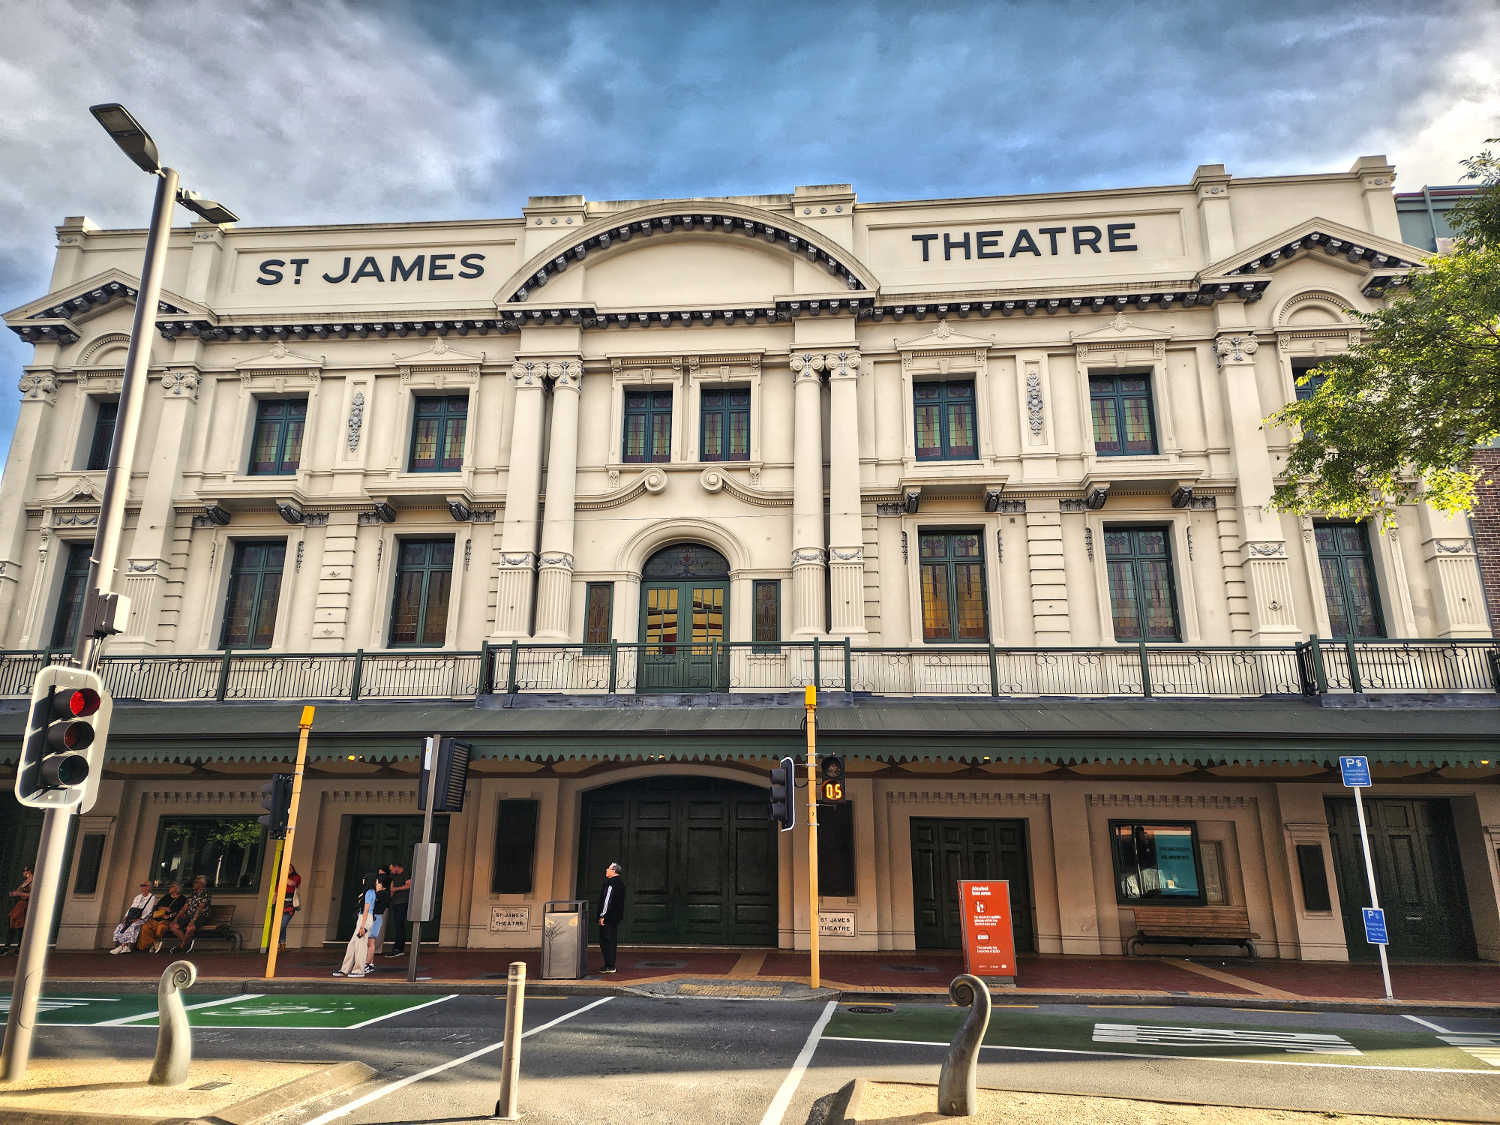 St James historic theatre, Wellington, NZ